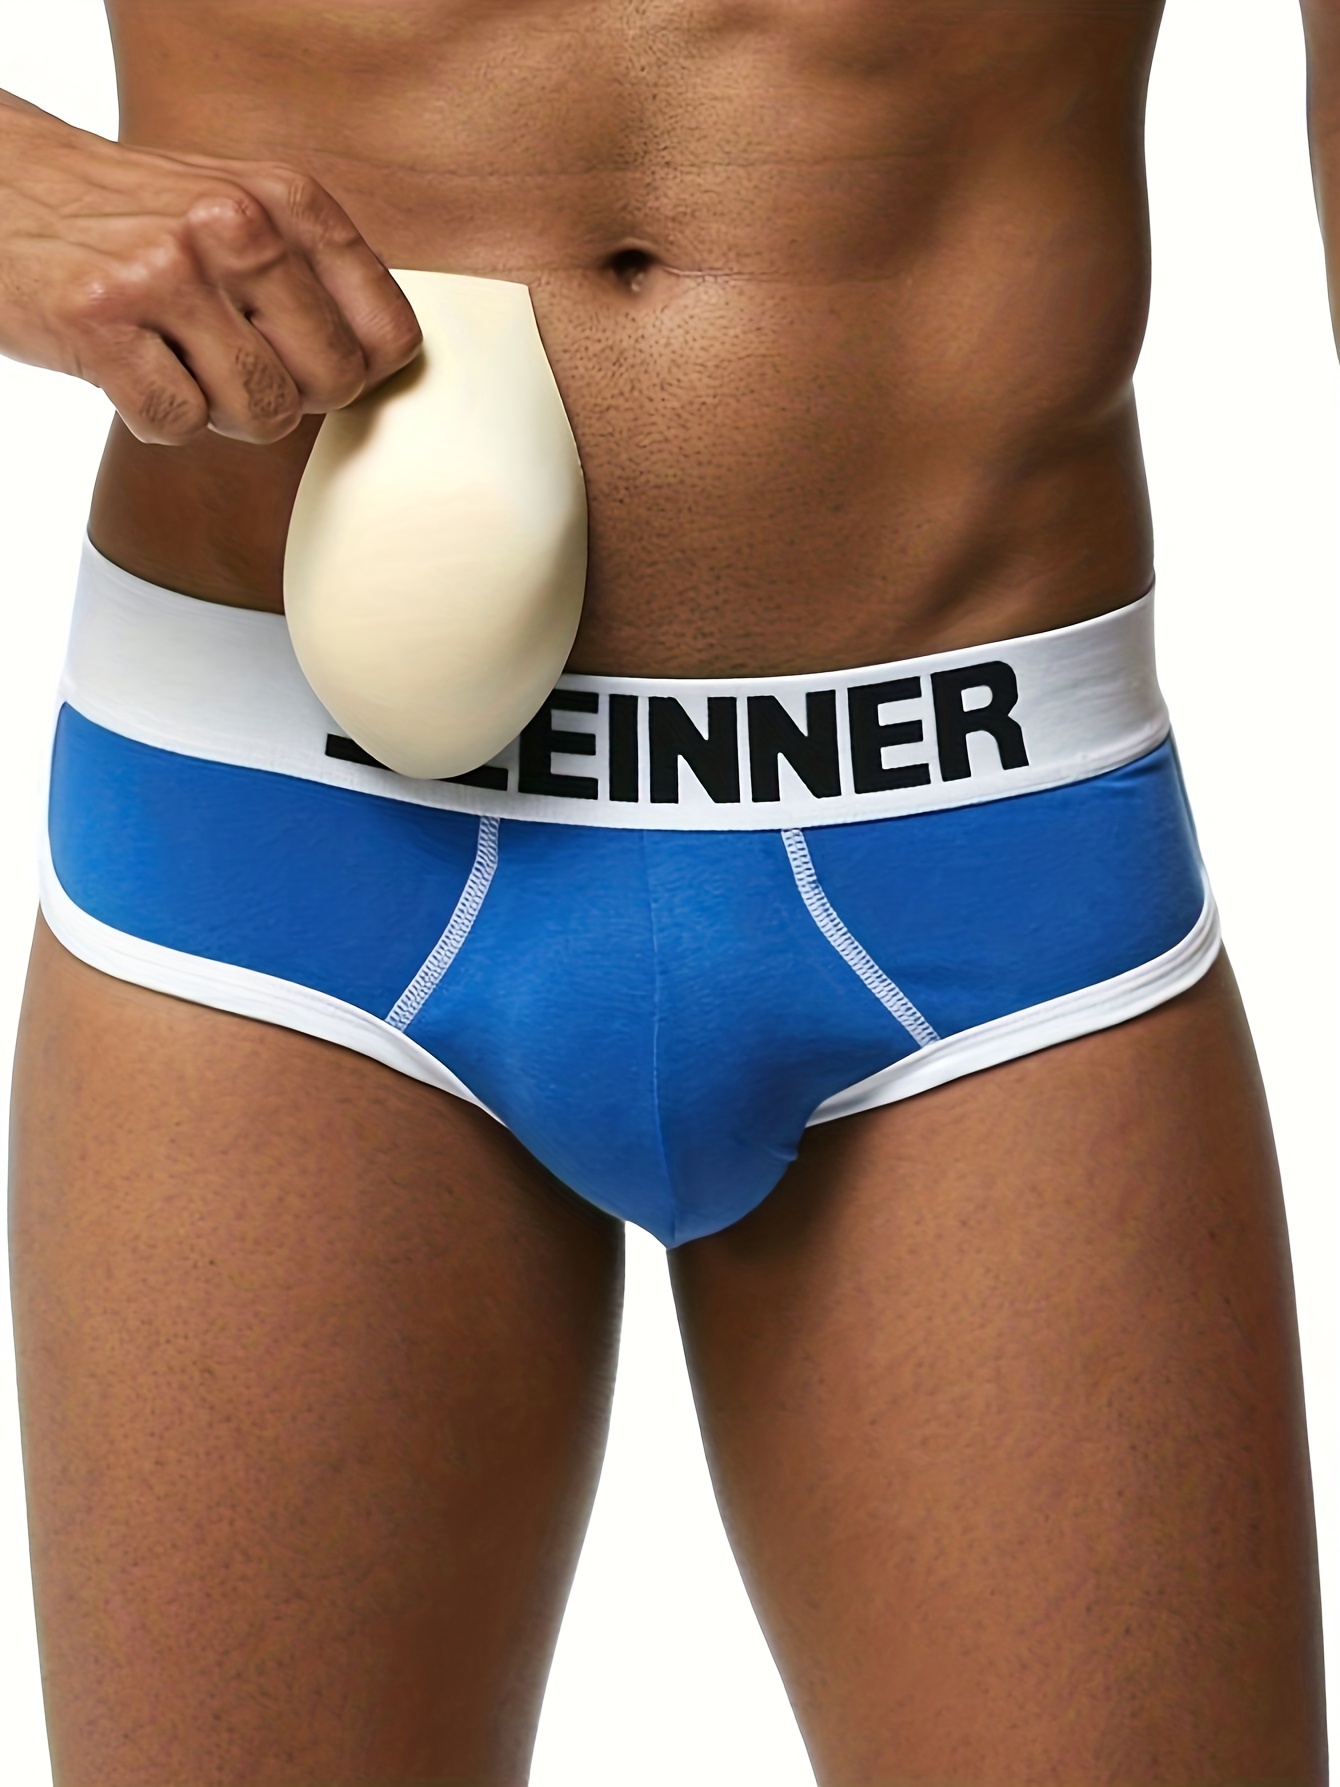 3pcs/box Men's Magnetic Therapy Underwear Men Enlargement